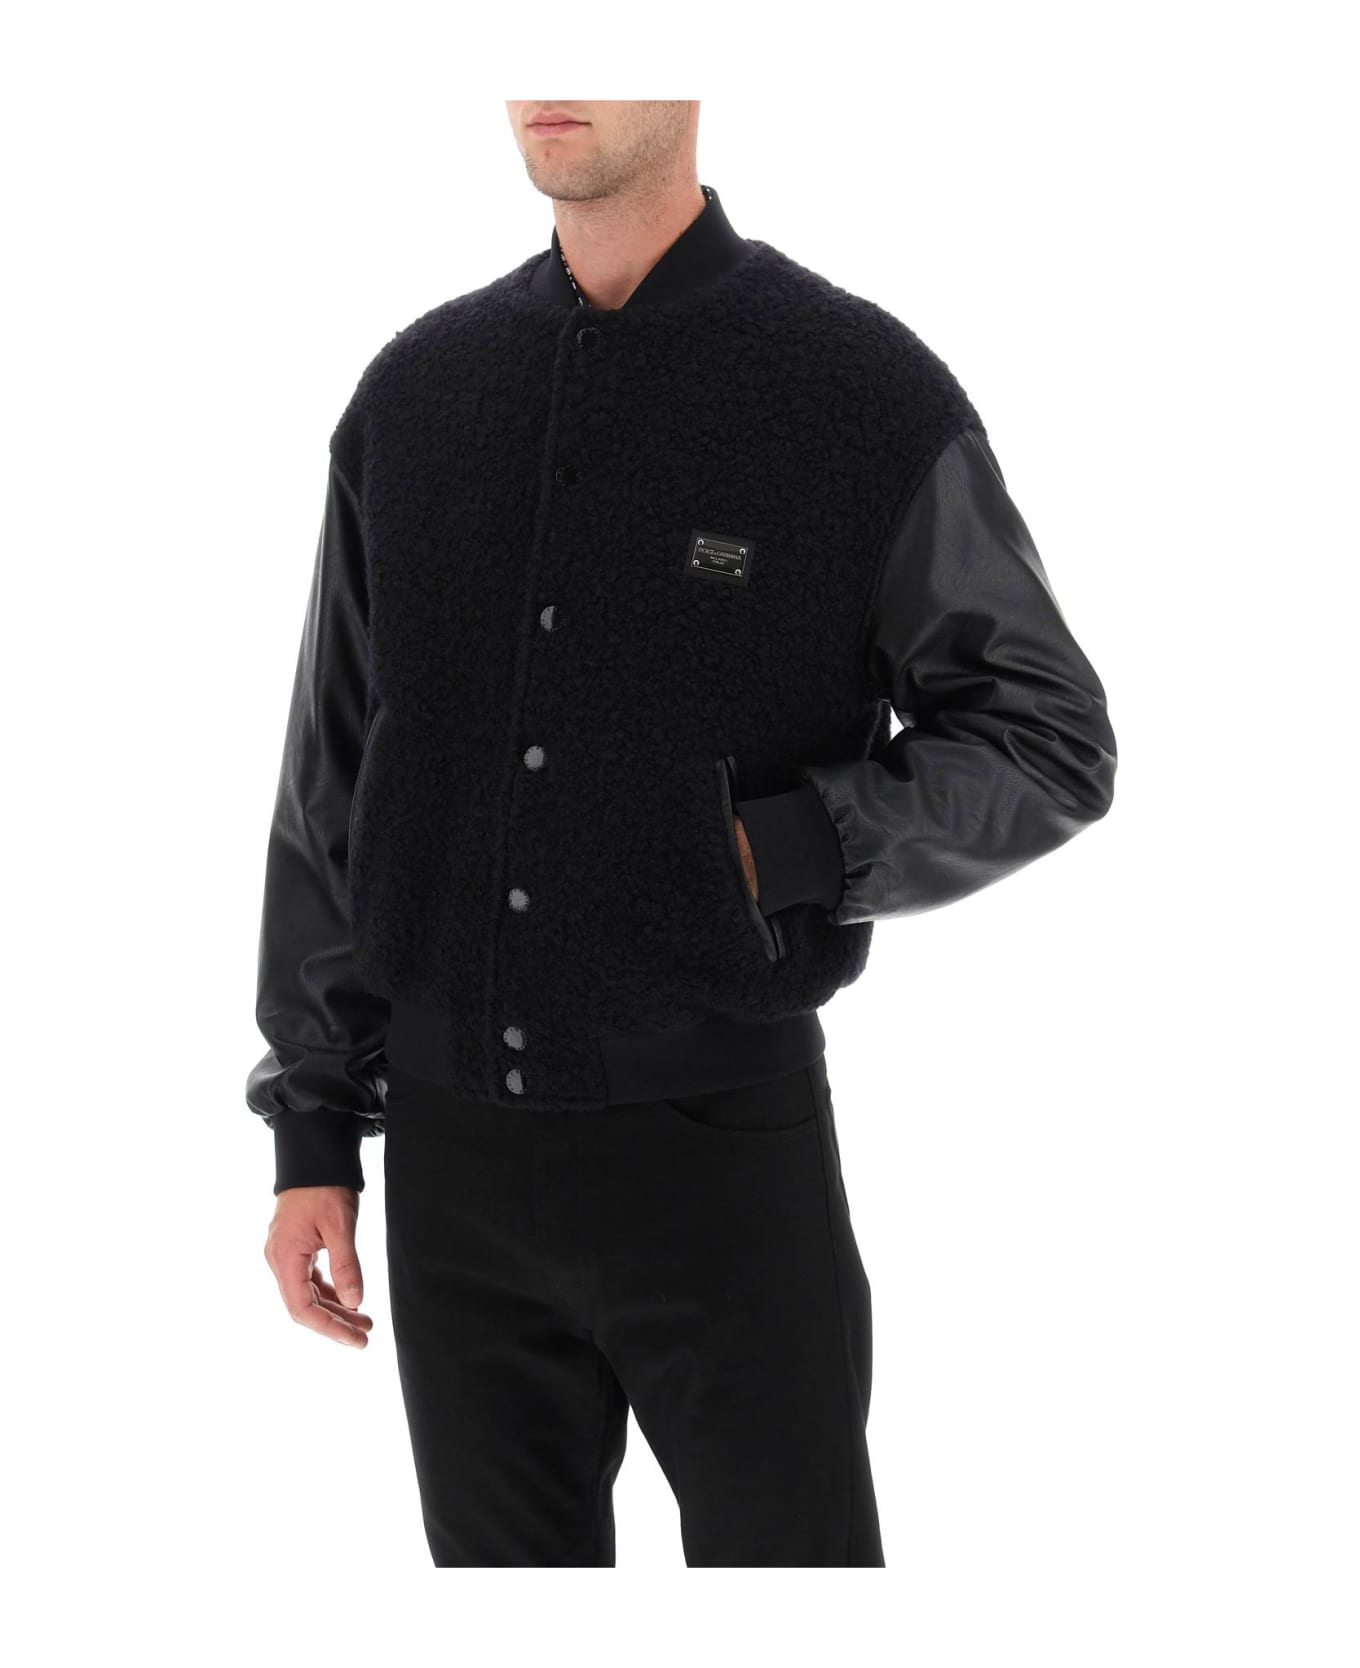 Dolce & Gabbana Wool Teddy Bomber Jacket - NERO (Black) ジャケット